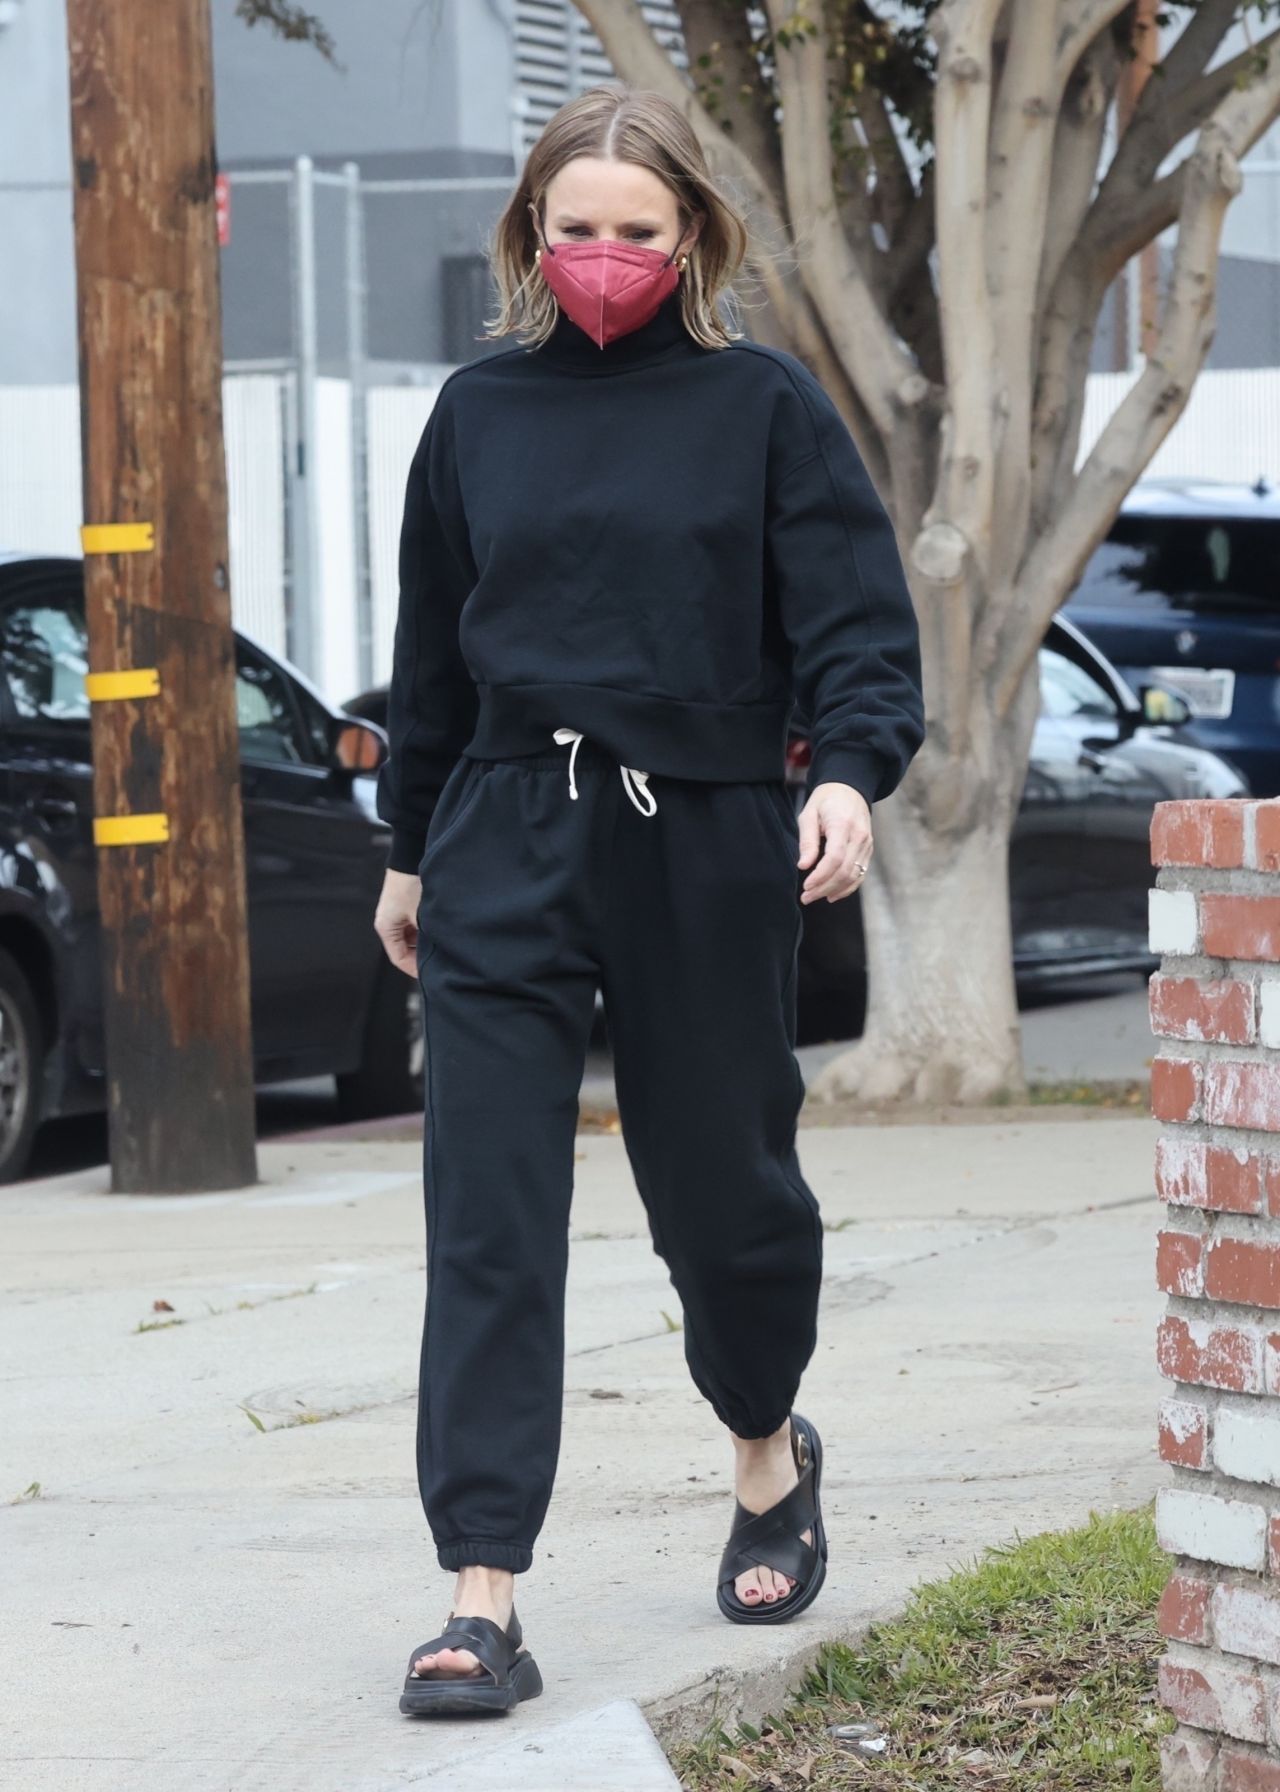 Kristen Bell wears a 'Mickey Mouse' sweatshirt and leggings as she